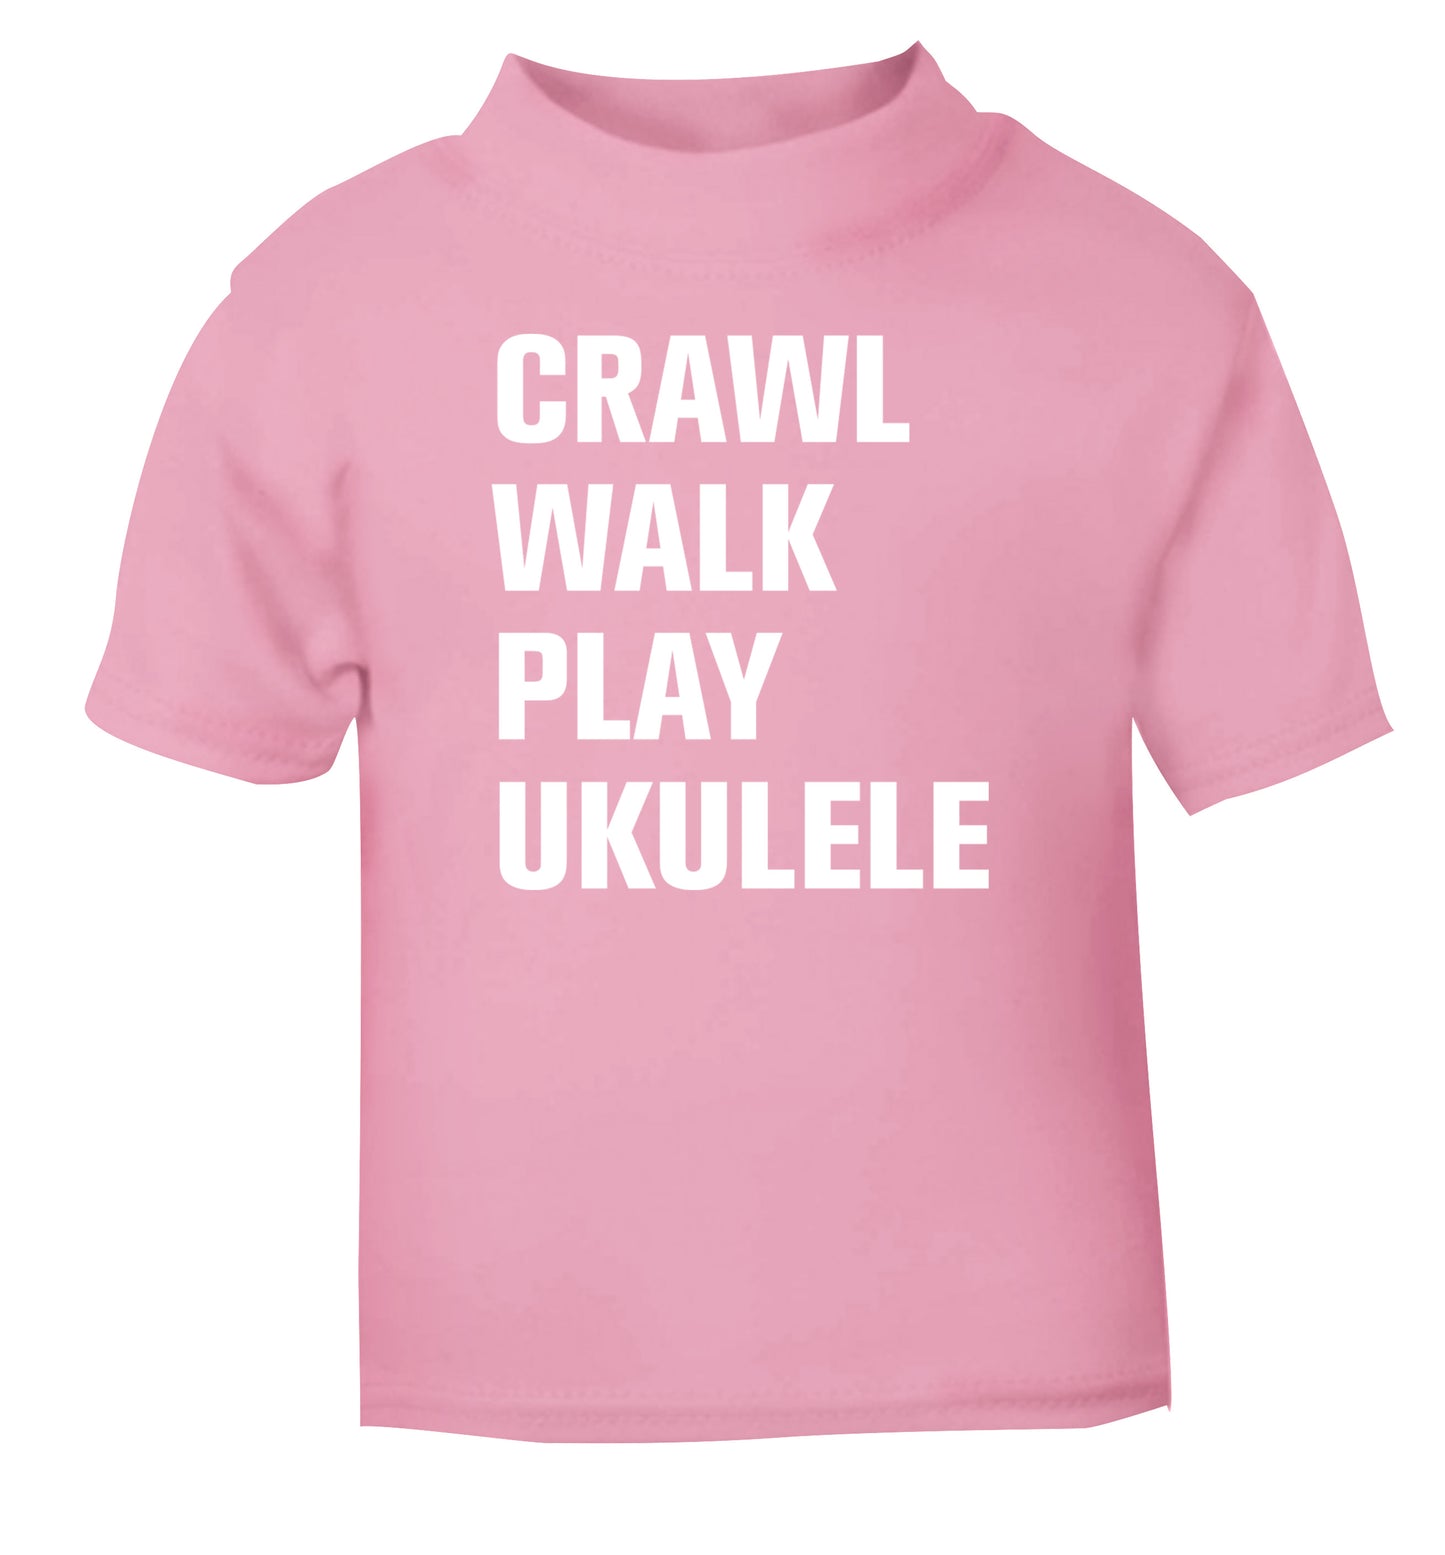 Crawl walk play ukulele light pink Baby Toddler Tshirt 2 Years